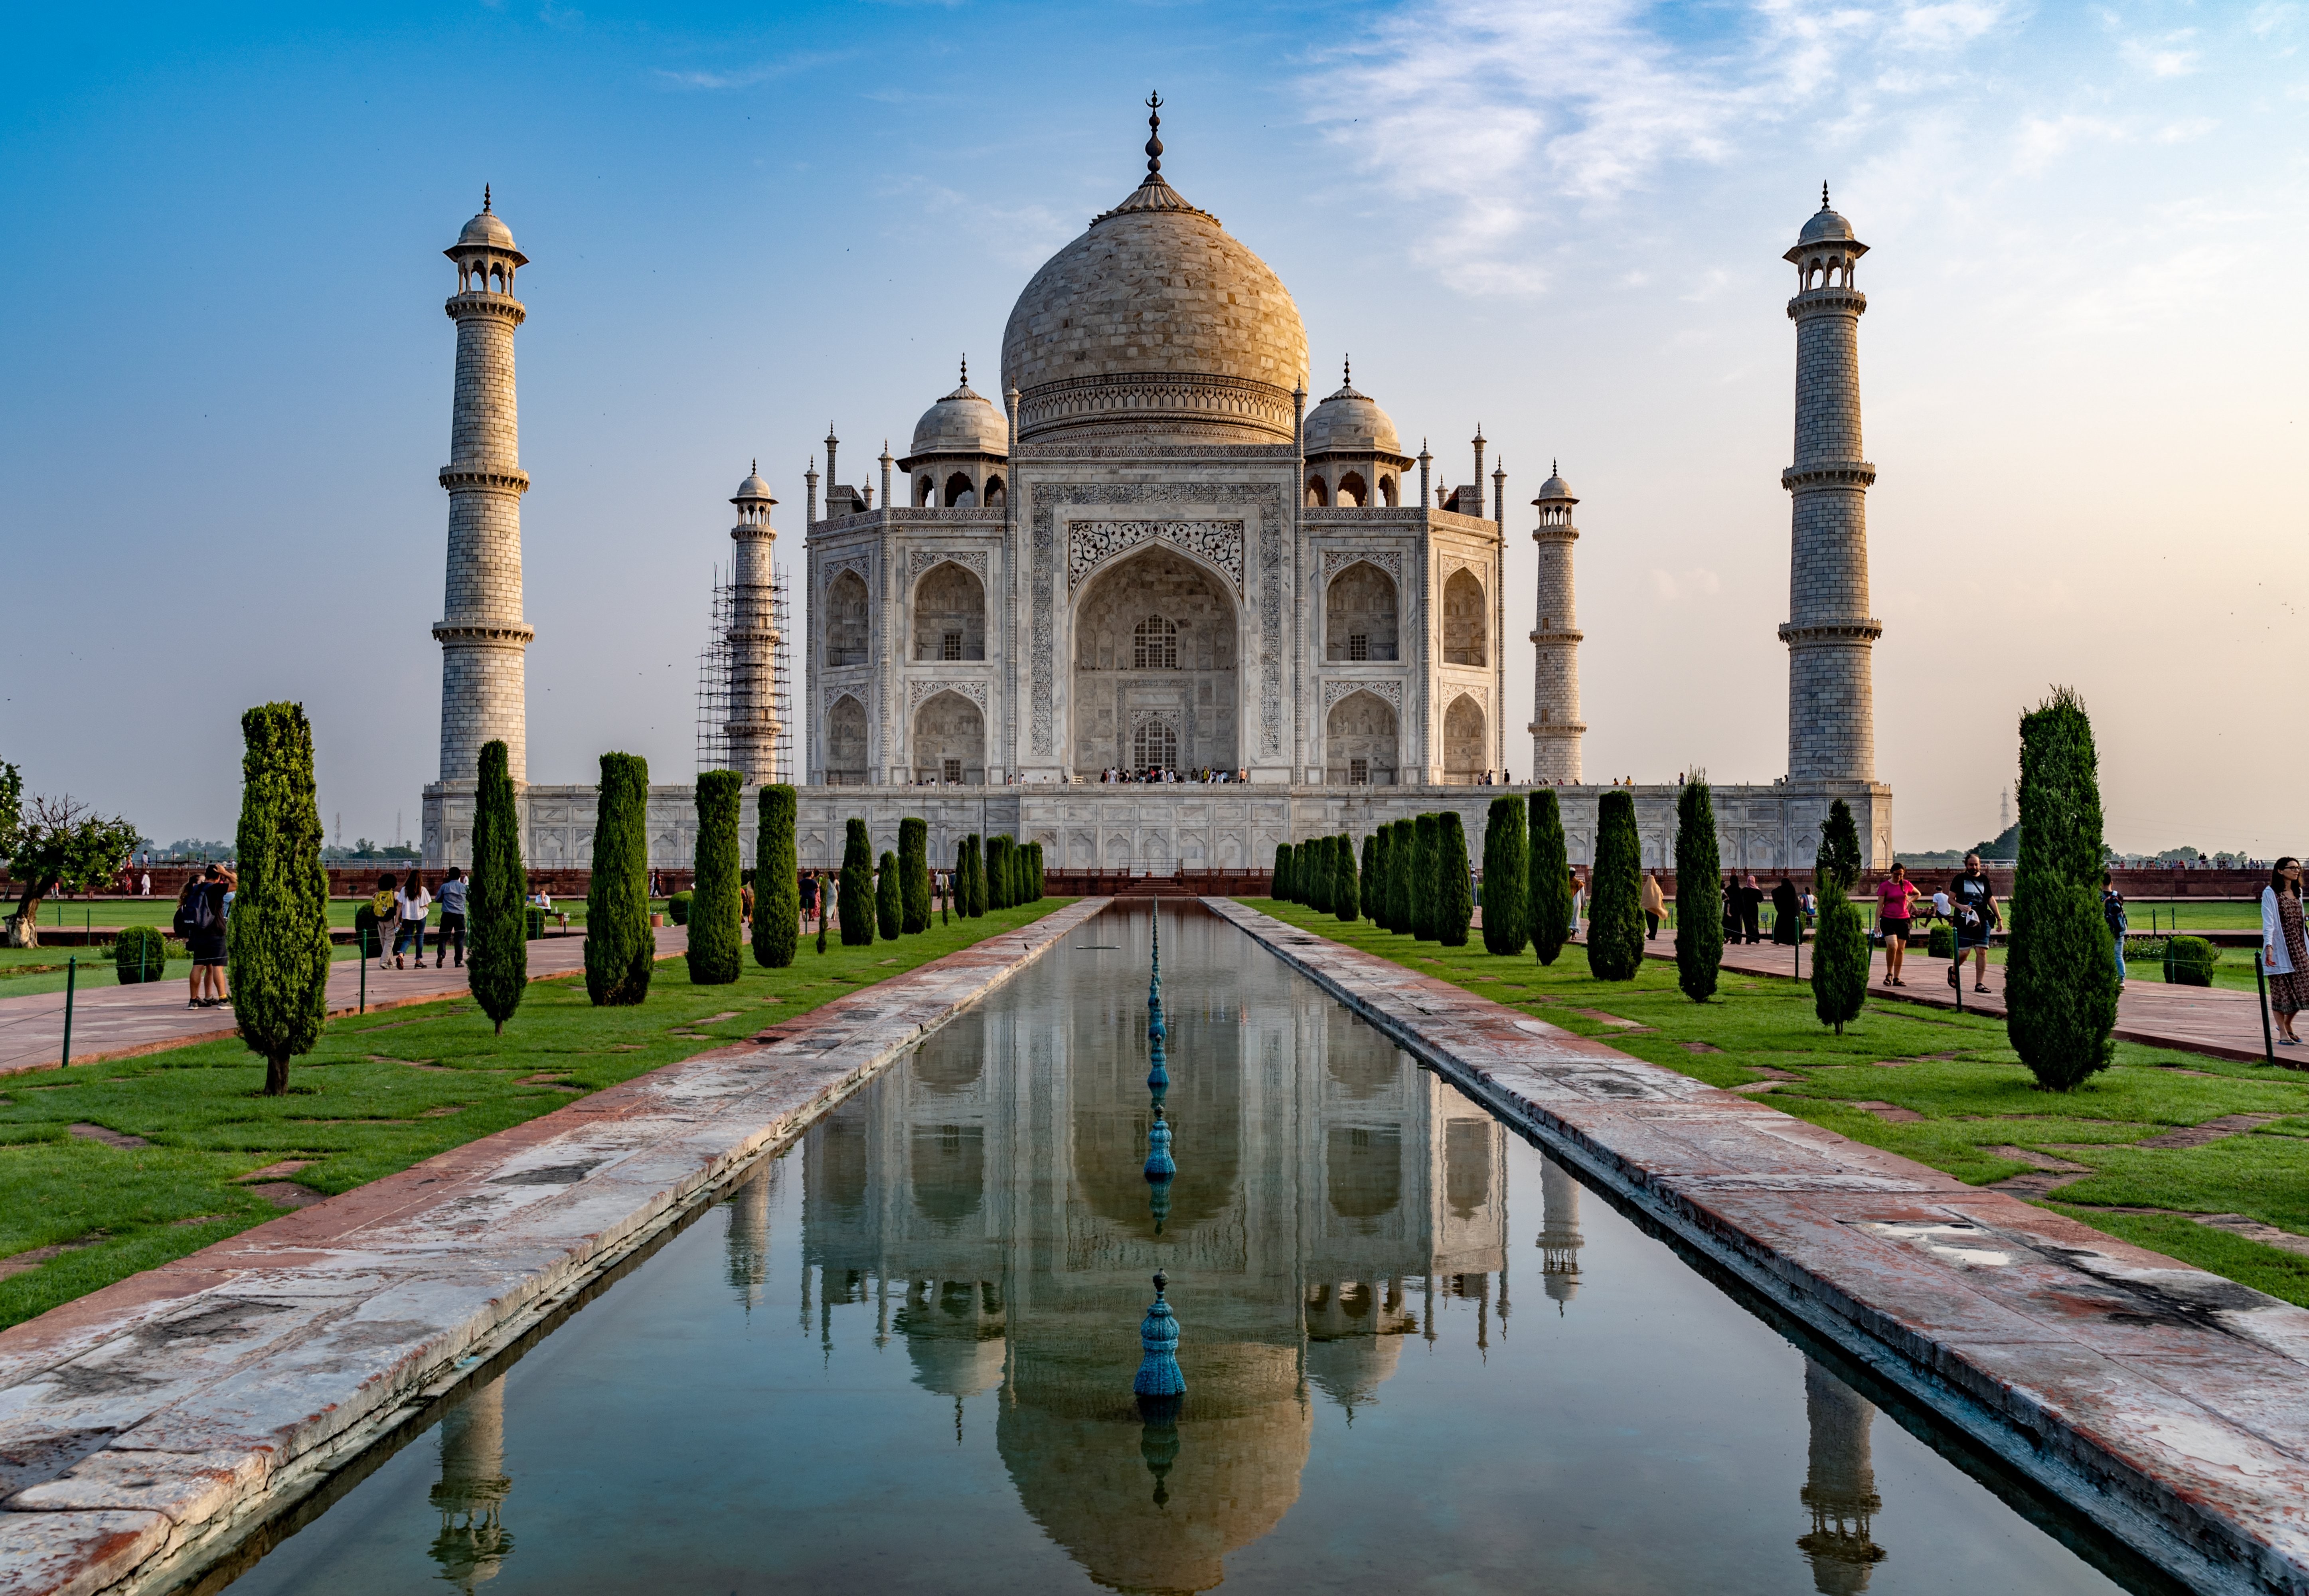 Foto Refleksi Taj Mahal Simetri